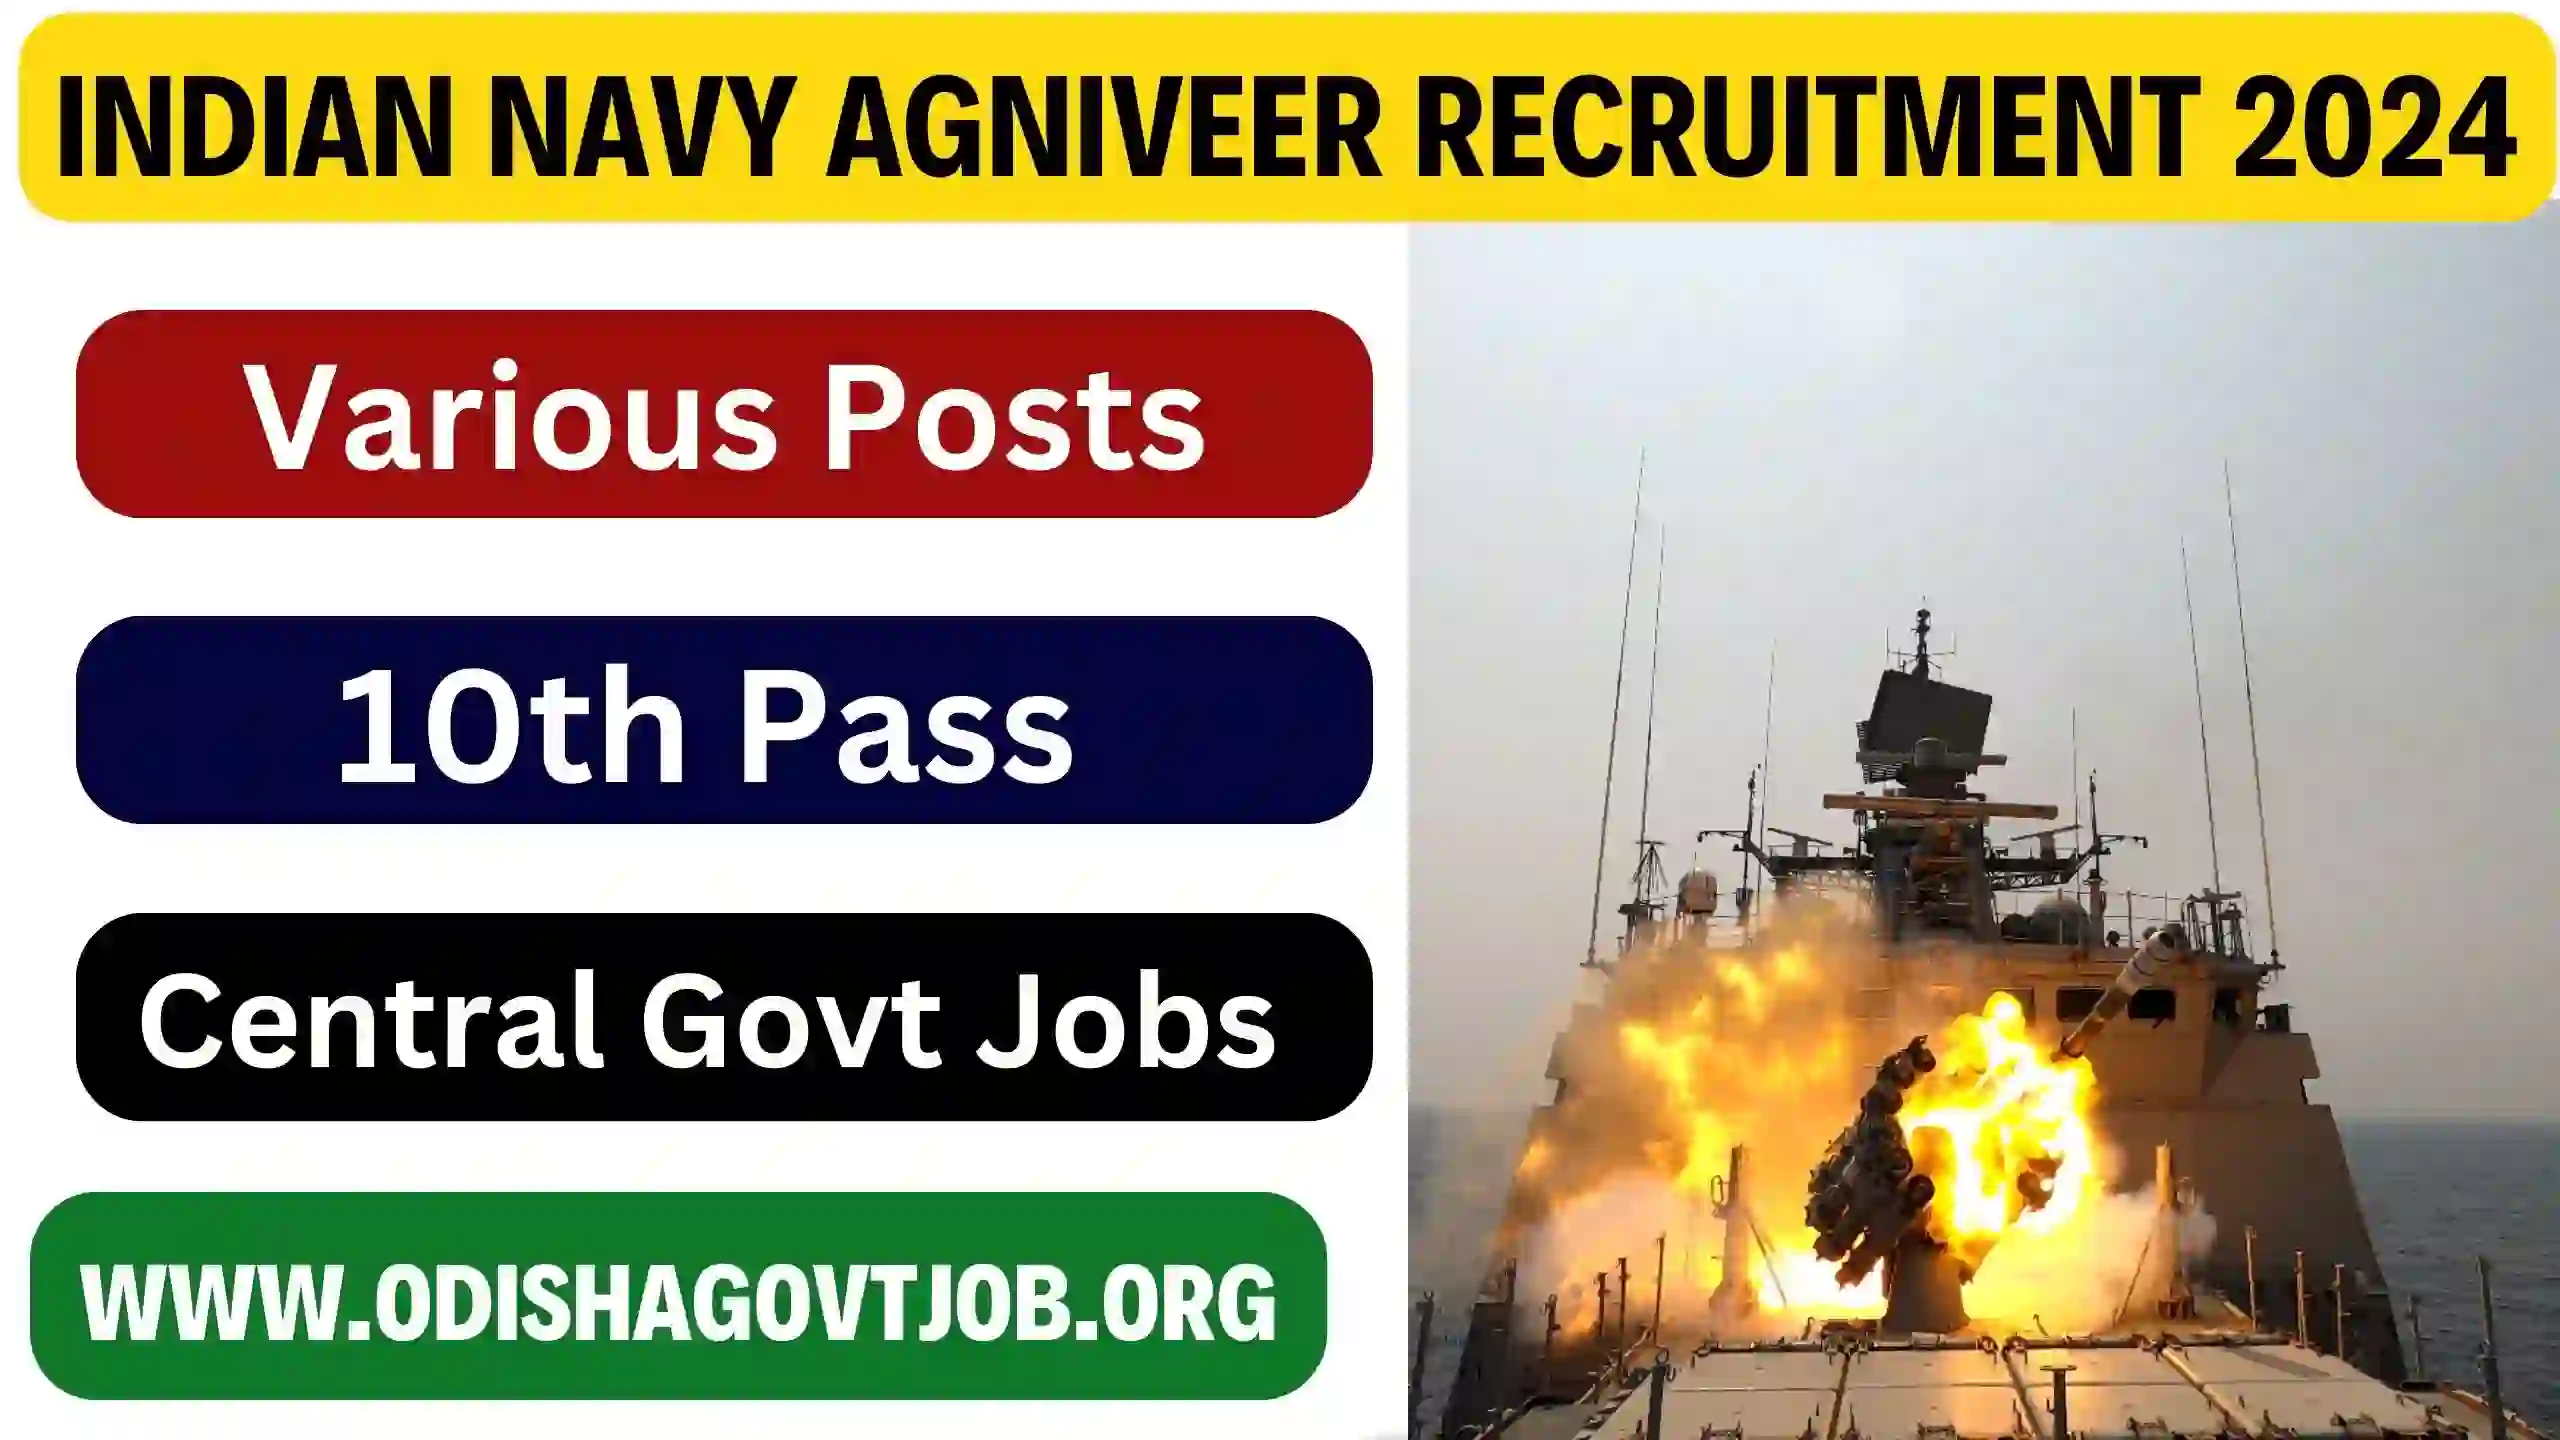 Indian Navy Agniveer Recruitment 2024